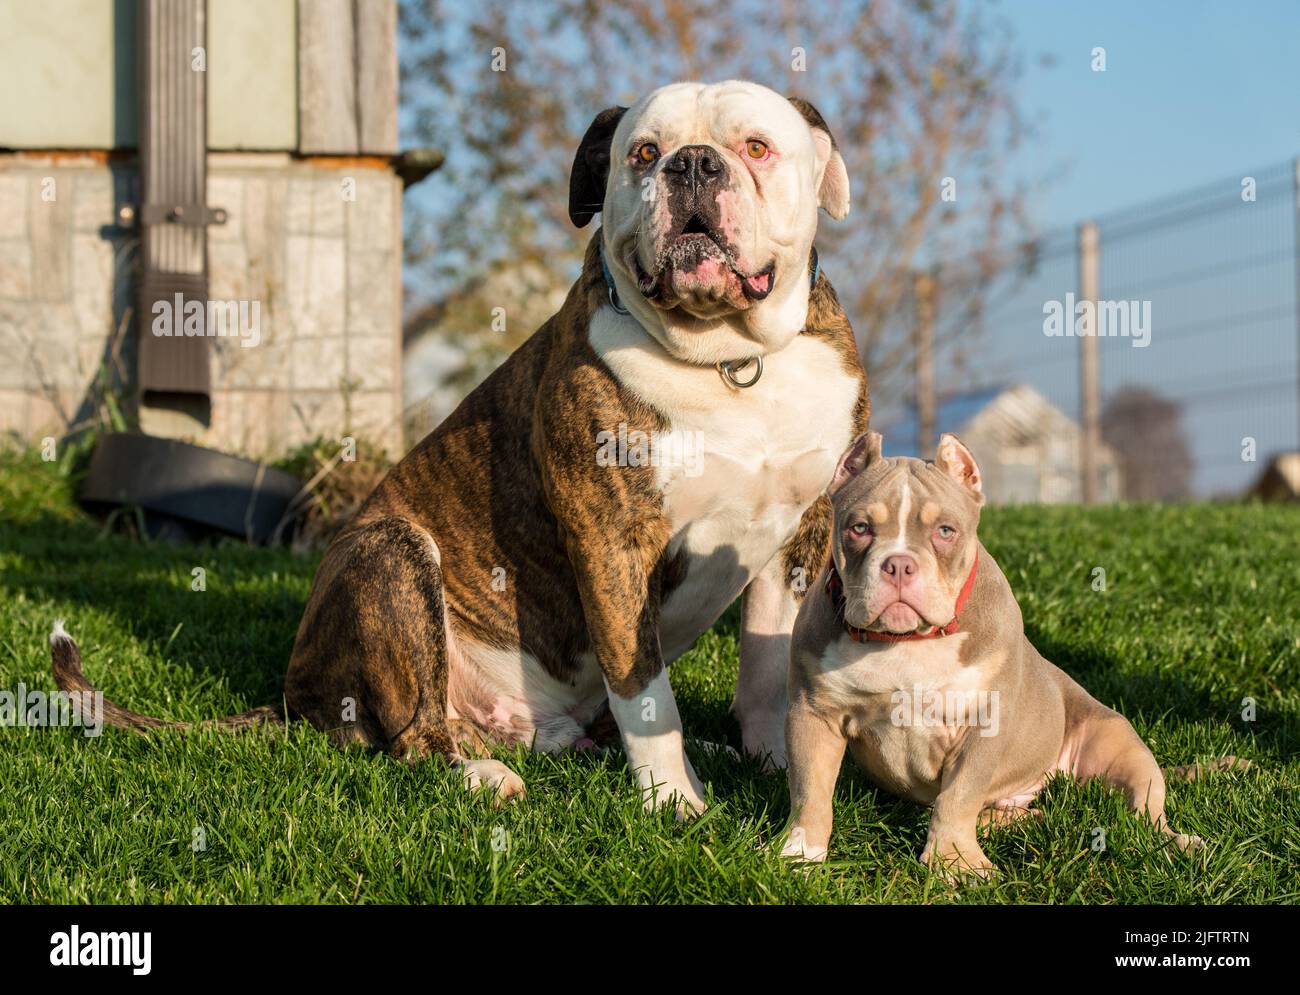 Brindle coat American Bulldog dog and American Bully puppy outside Stock Photo